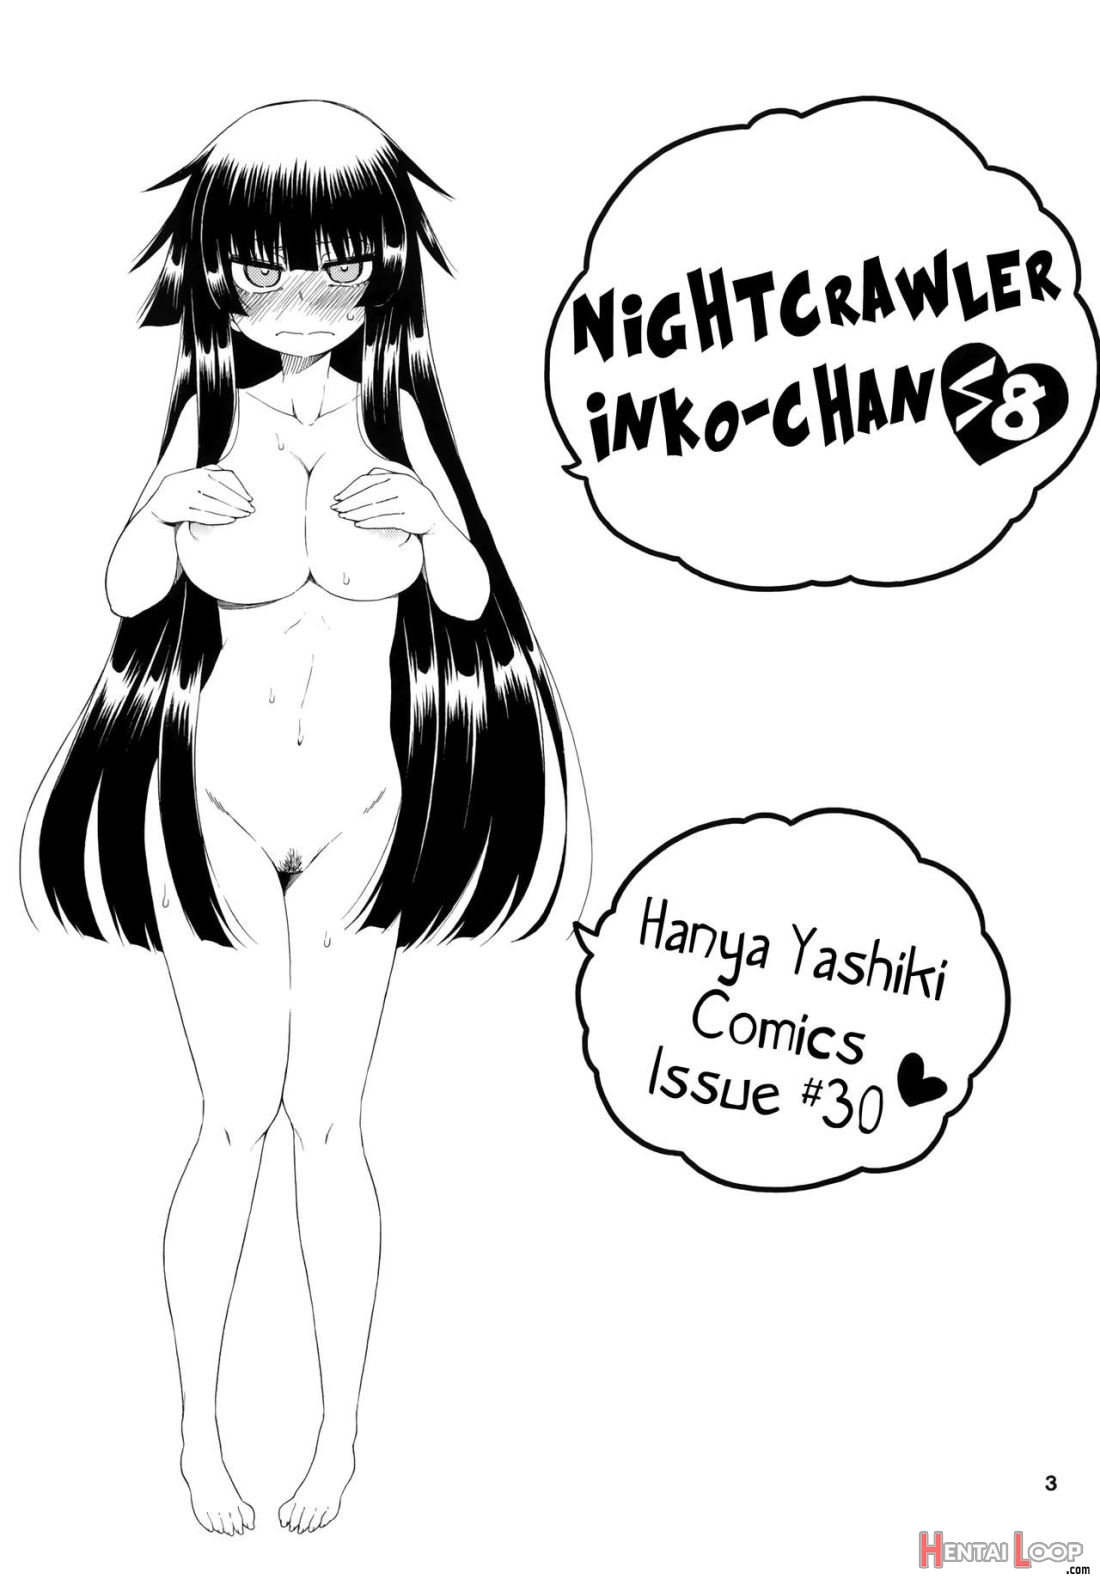 Yobae Inko-chan S8 page 2